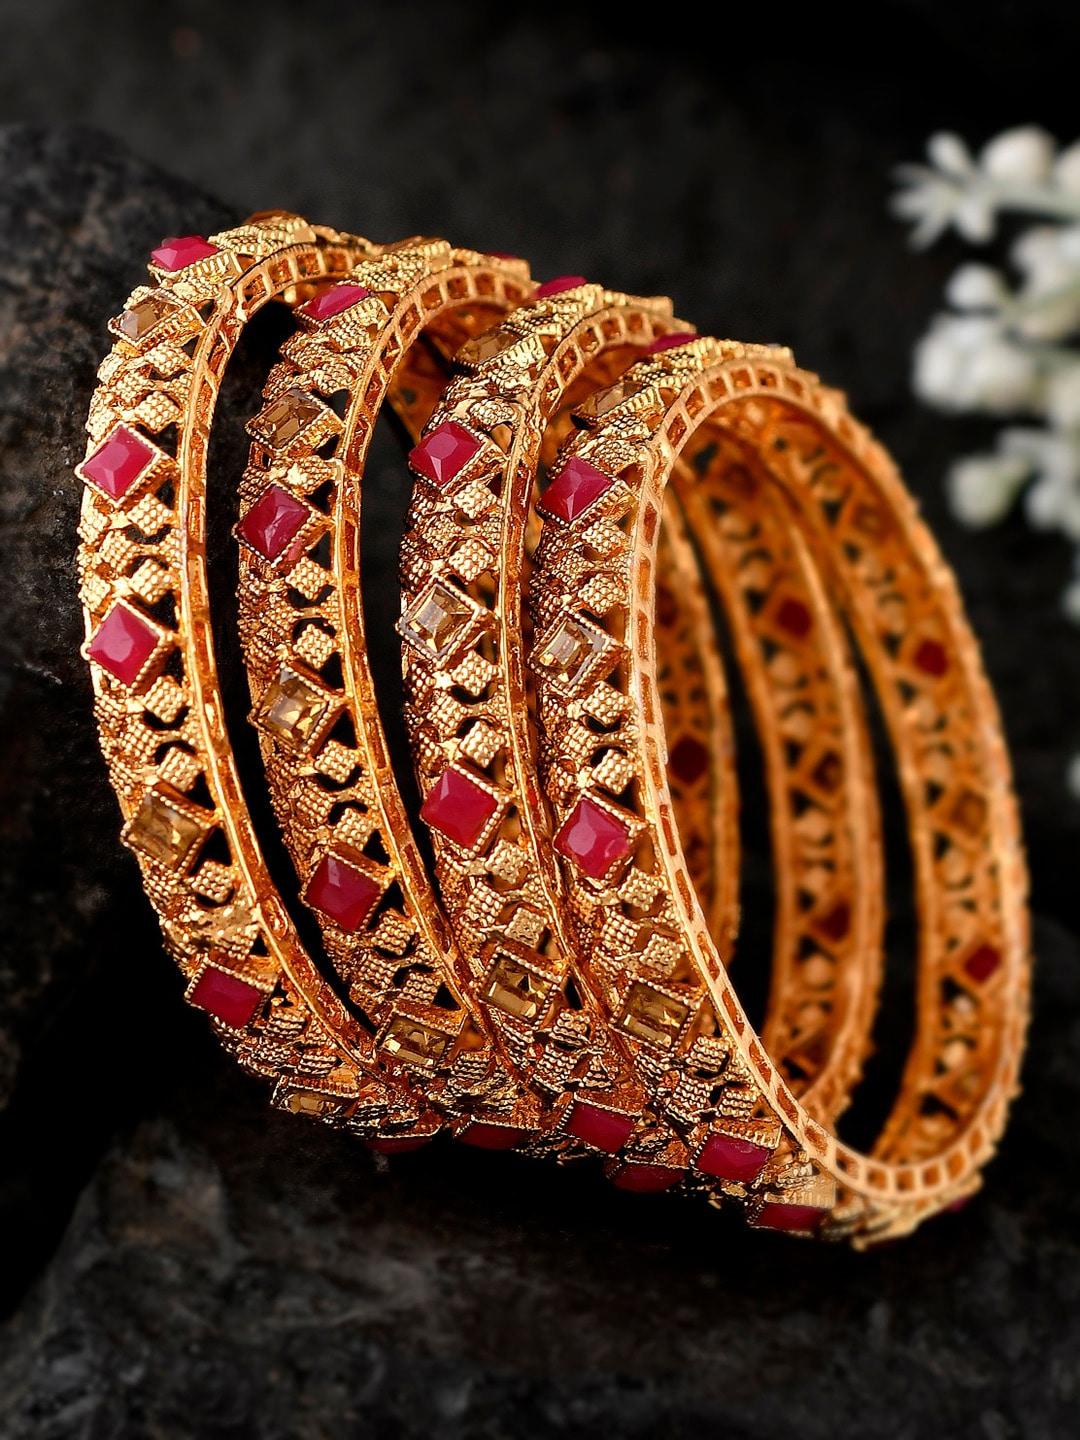 shoshaa set of 4 gold-plated stone-studded bangles